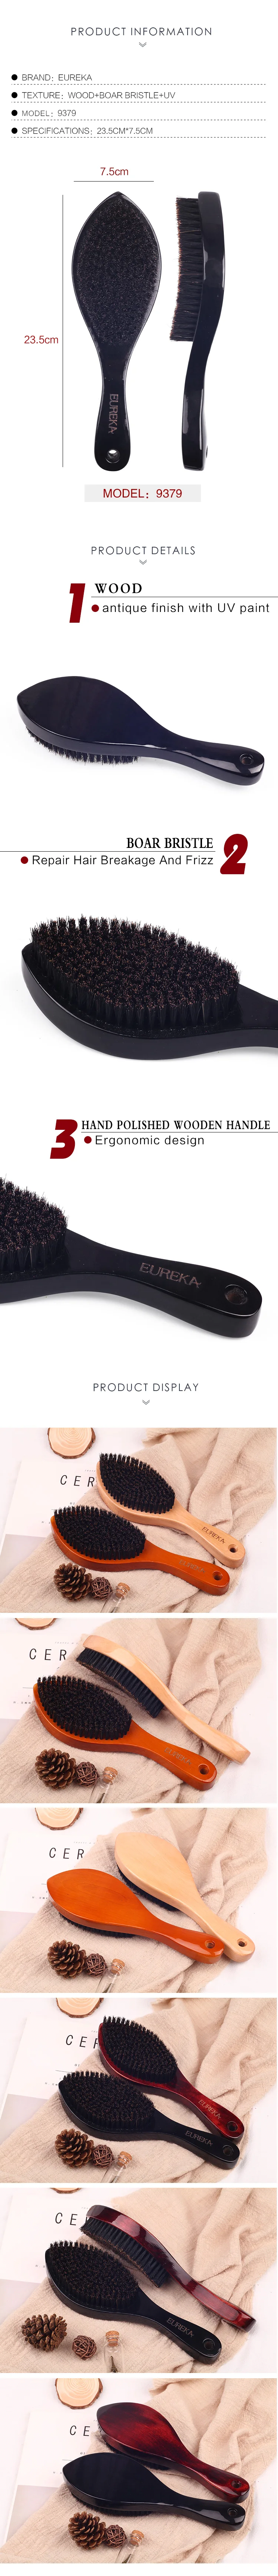 EUREKA 93079 Engraved Boar Bristle Hair Brush Wood Hair Brush Massage Classical Style Hair Brush